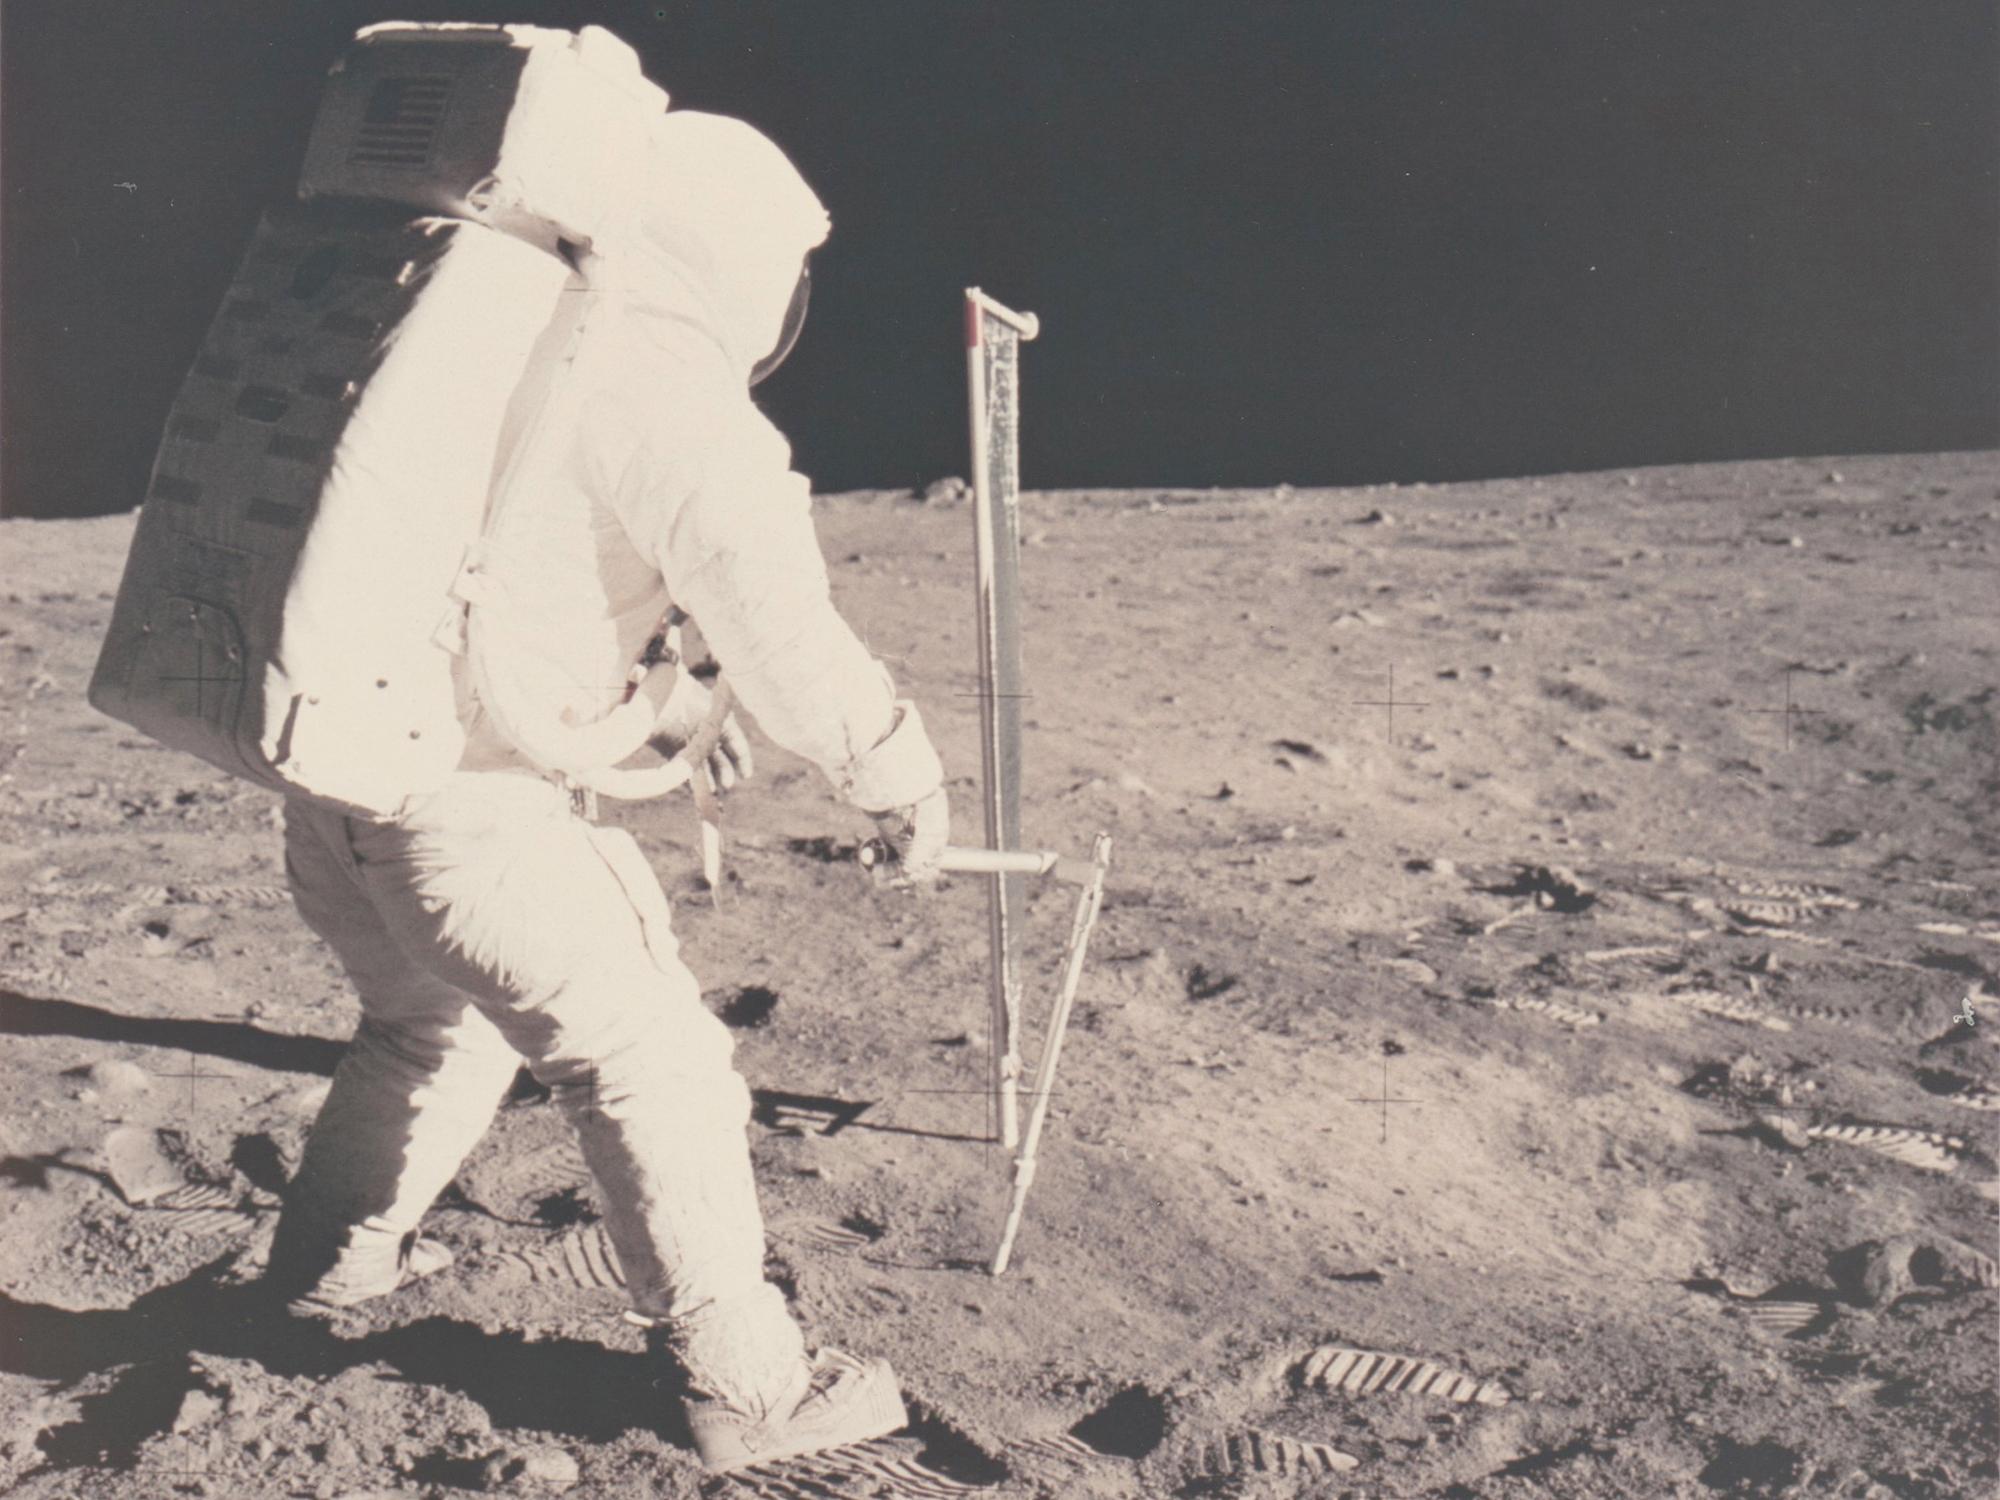 American Vintage NASA Photograph of the Apollo 11 Moon Landing For Sale